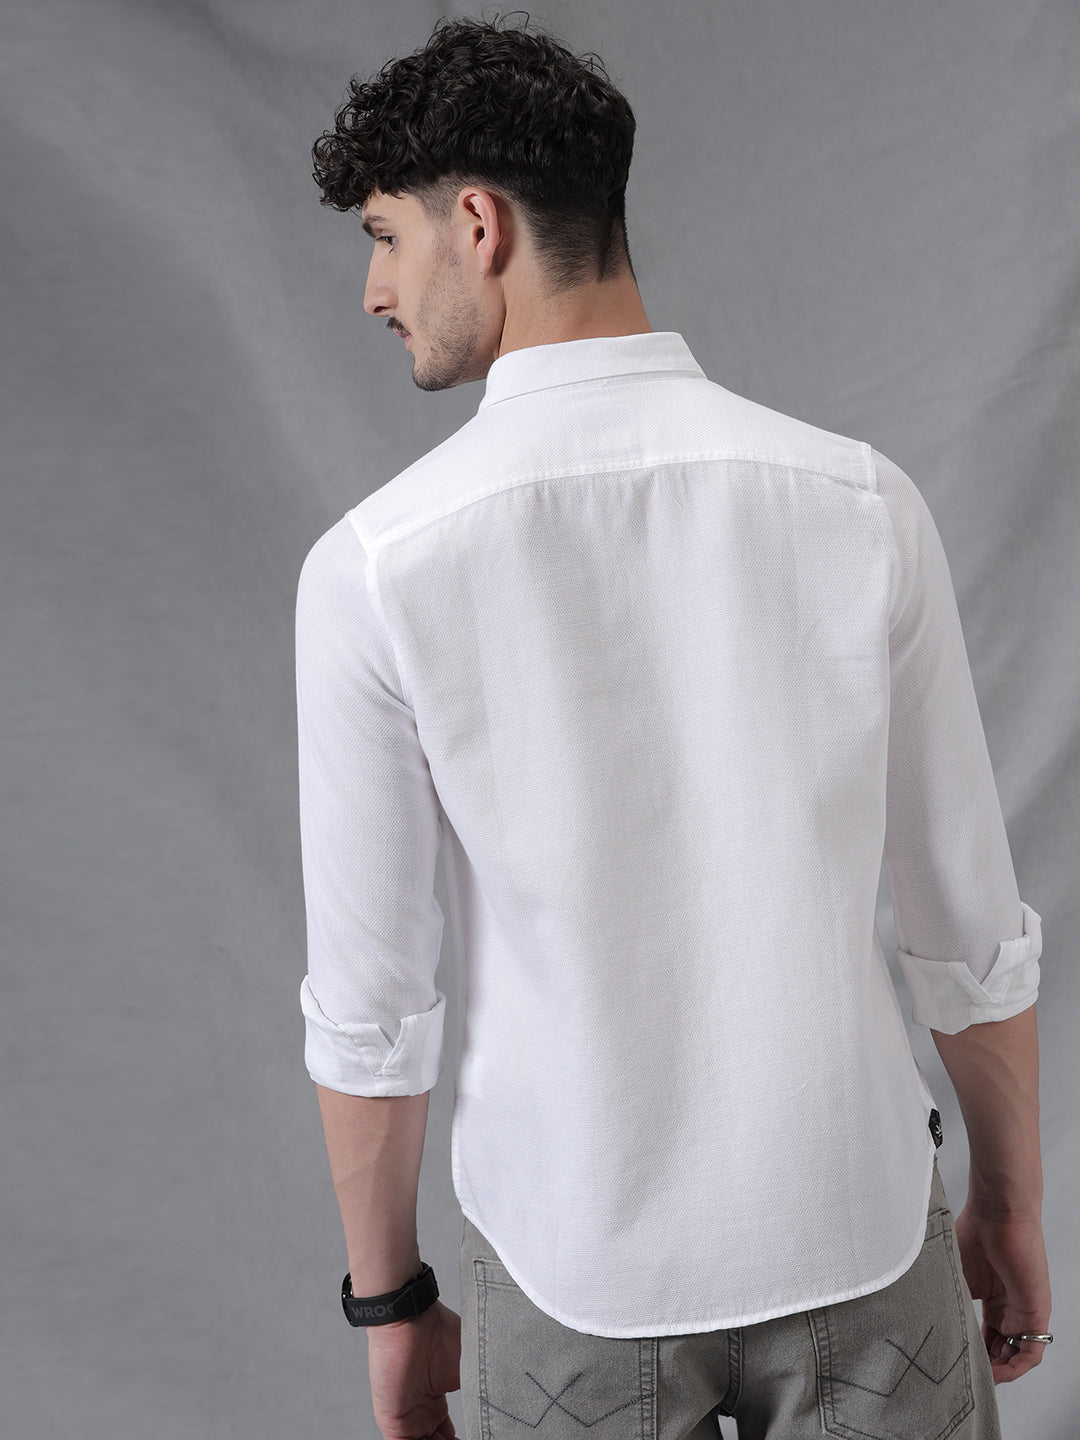 Crisp White Oxford Shirt